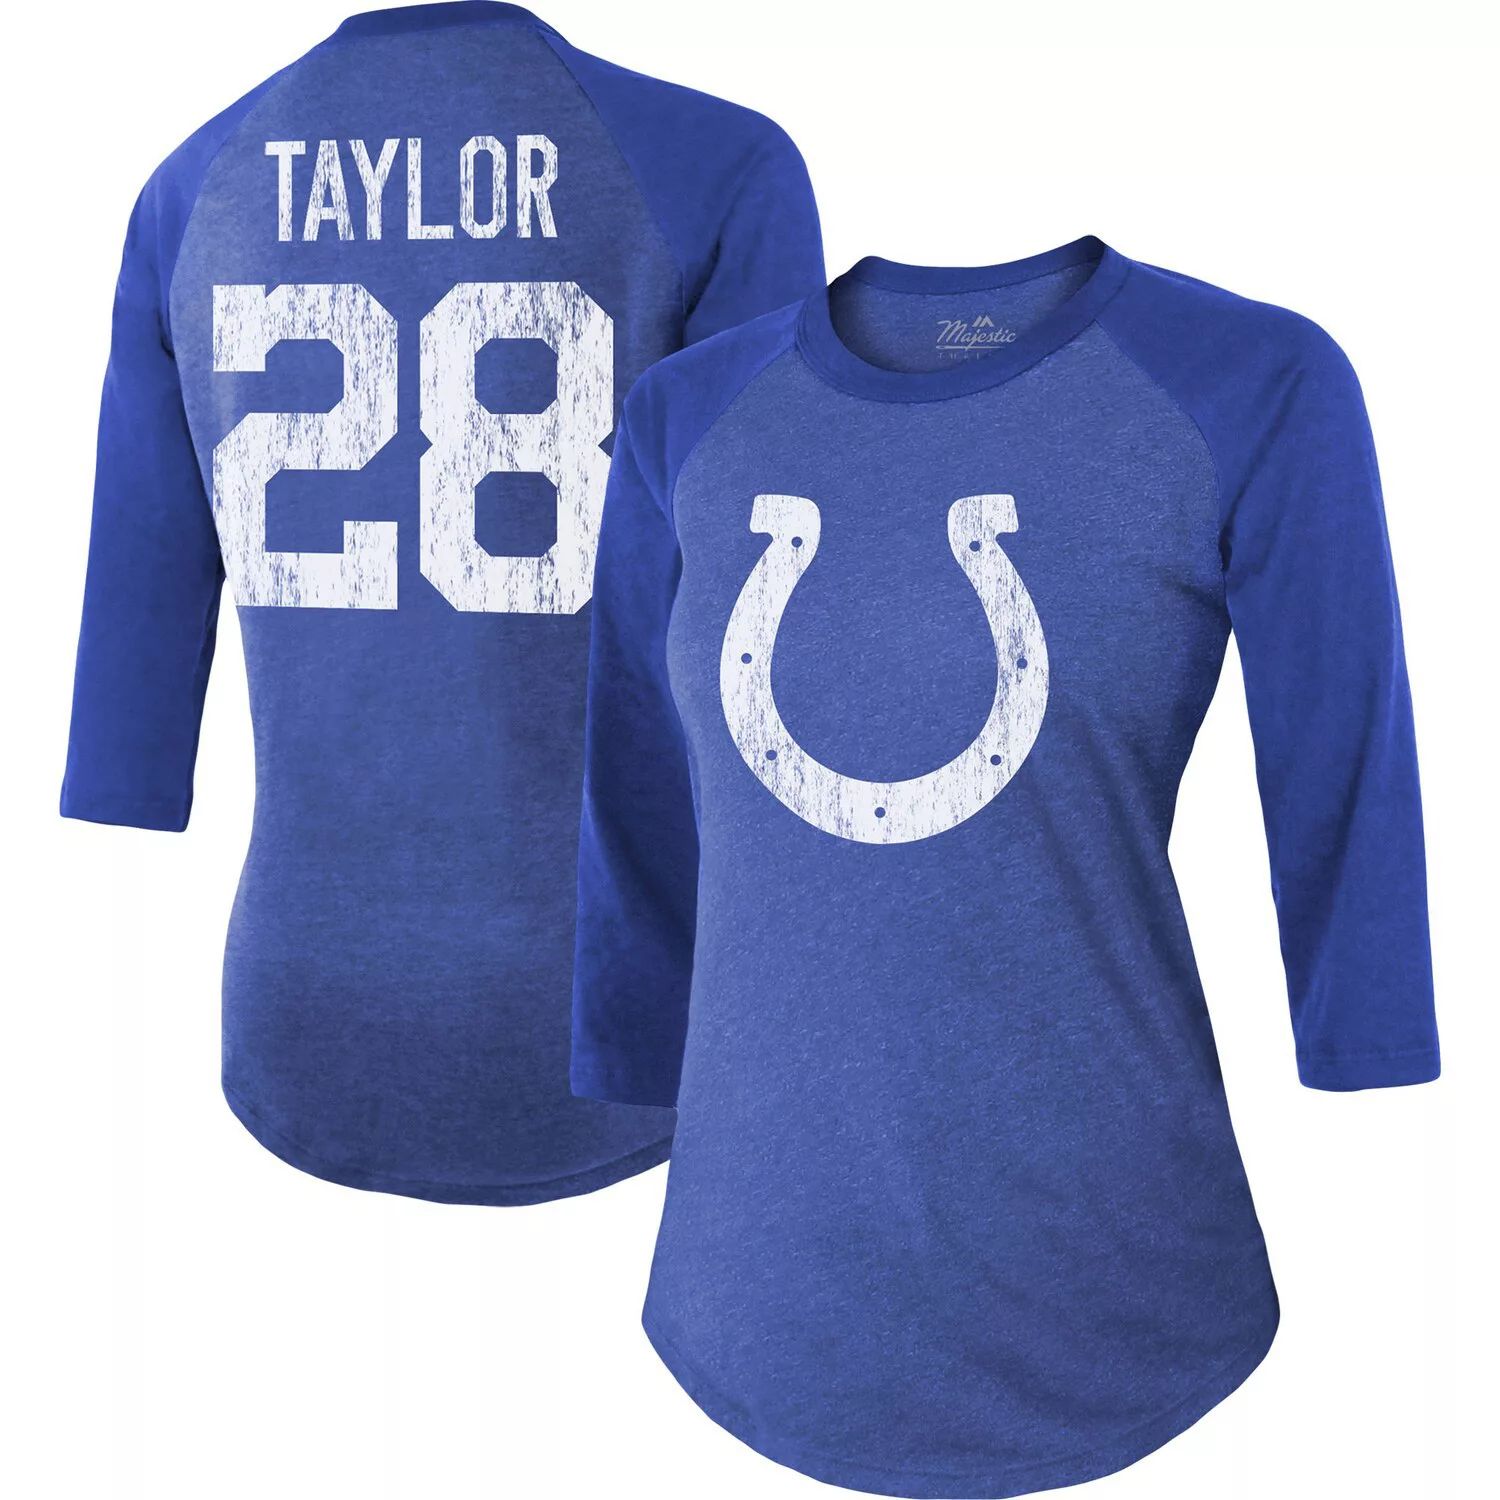 Женская футболка Majestic Threads Jonathan Taylor Royal Indianapolis Colts с именем и номером игрока реглан Tri-Blend с рукавами 3/4 Majestic